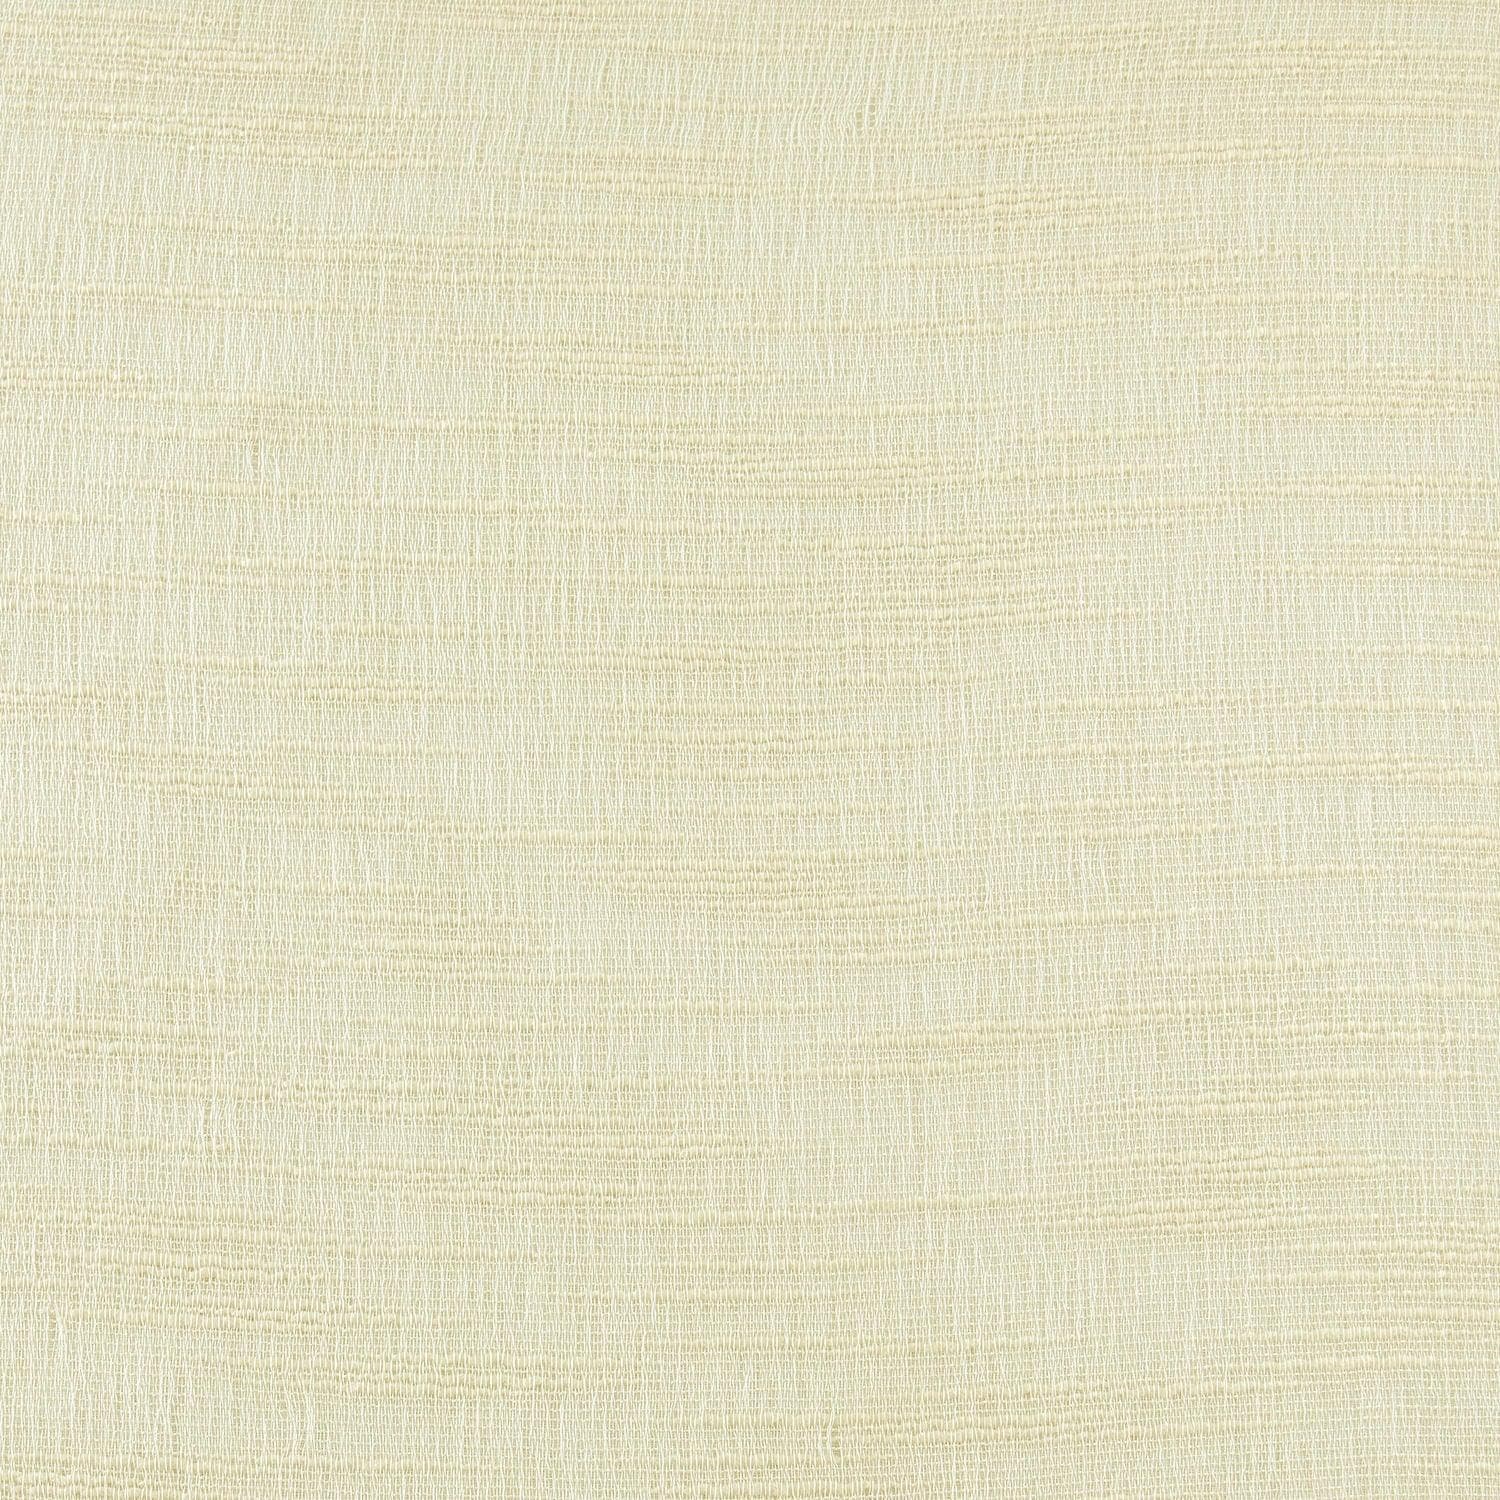 Cream Open Weave Linen Blend Sheer Swatch